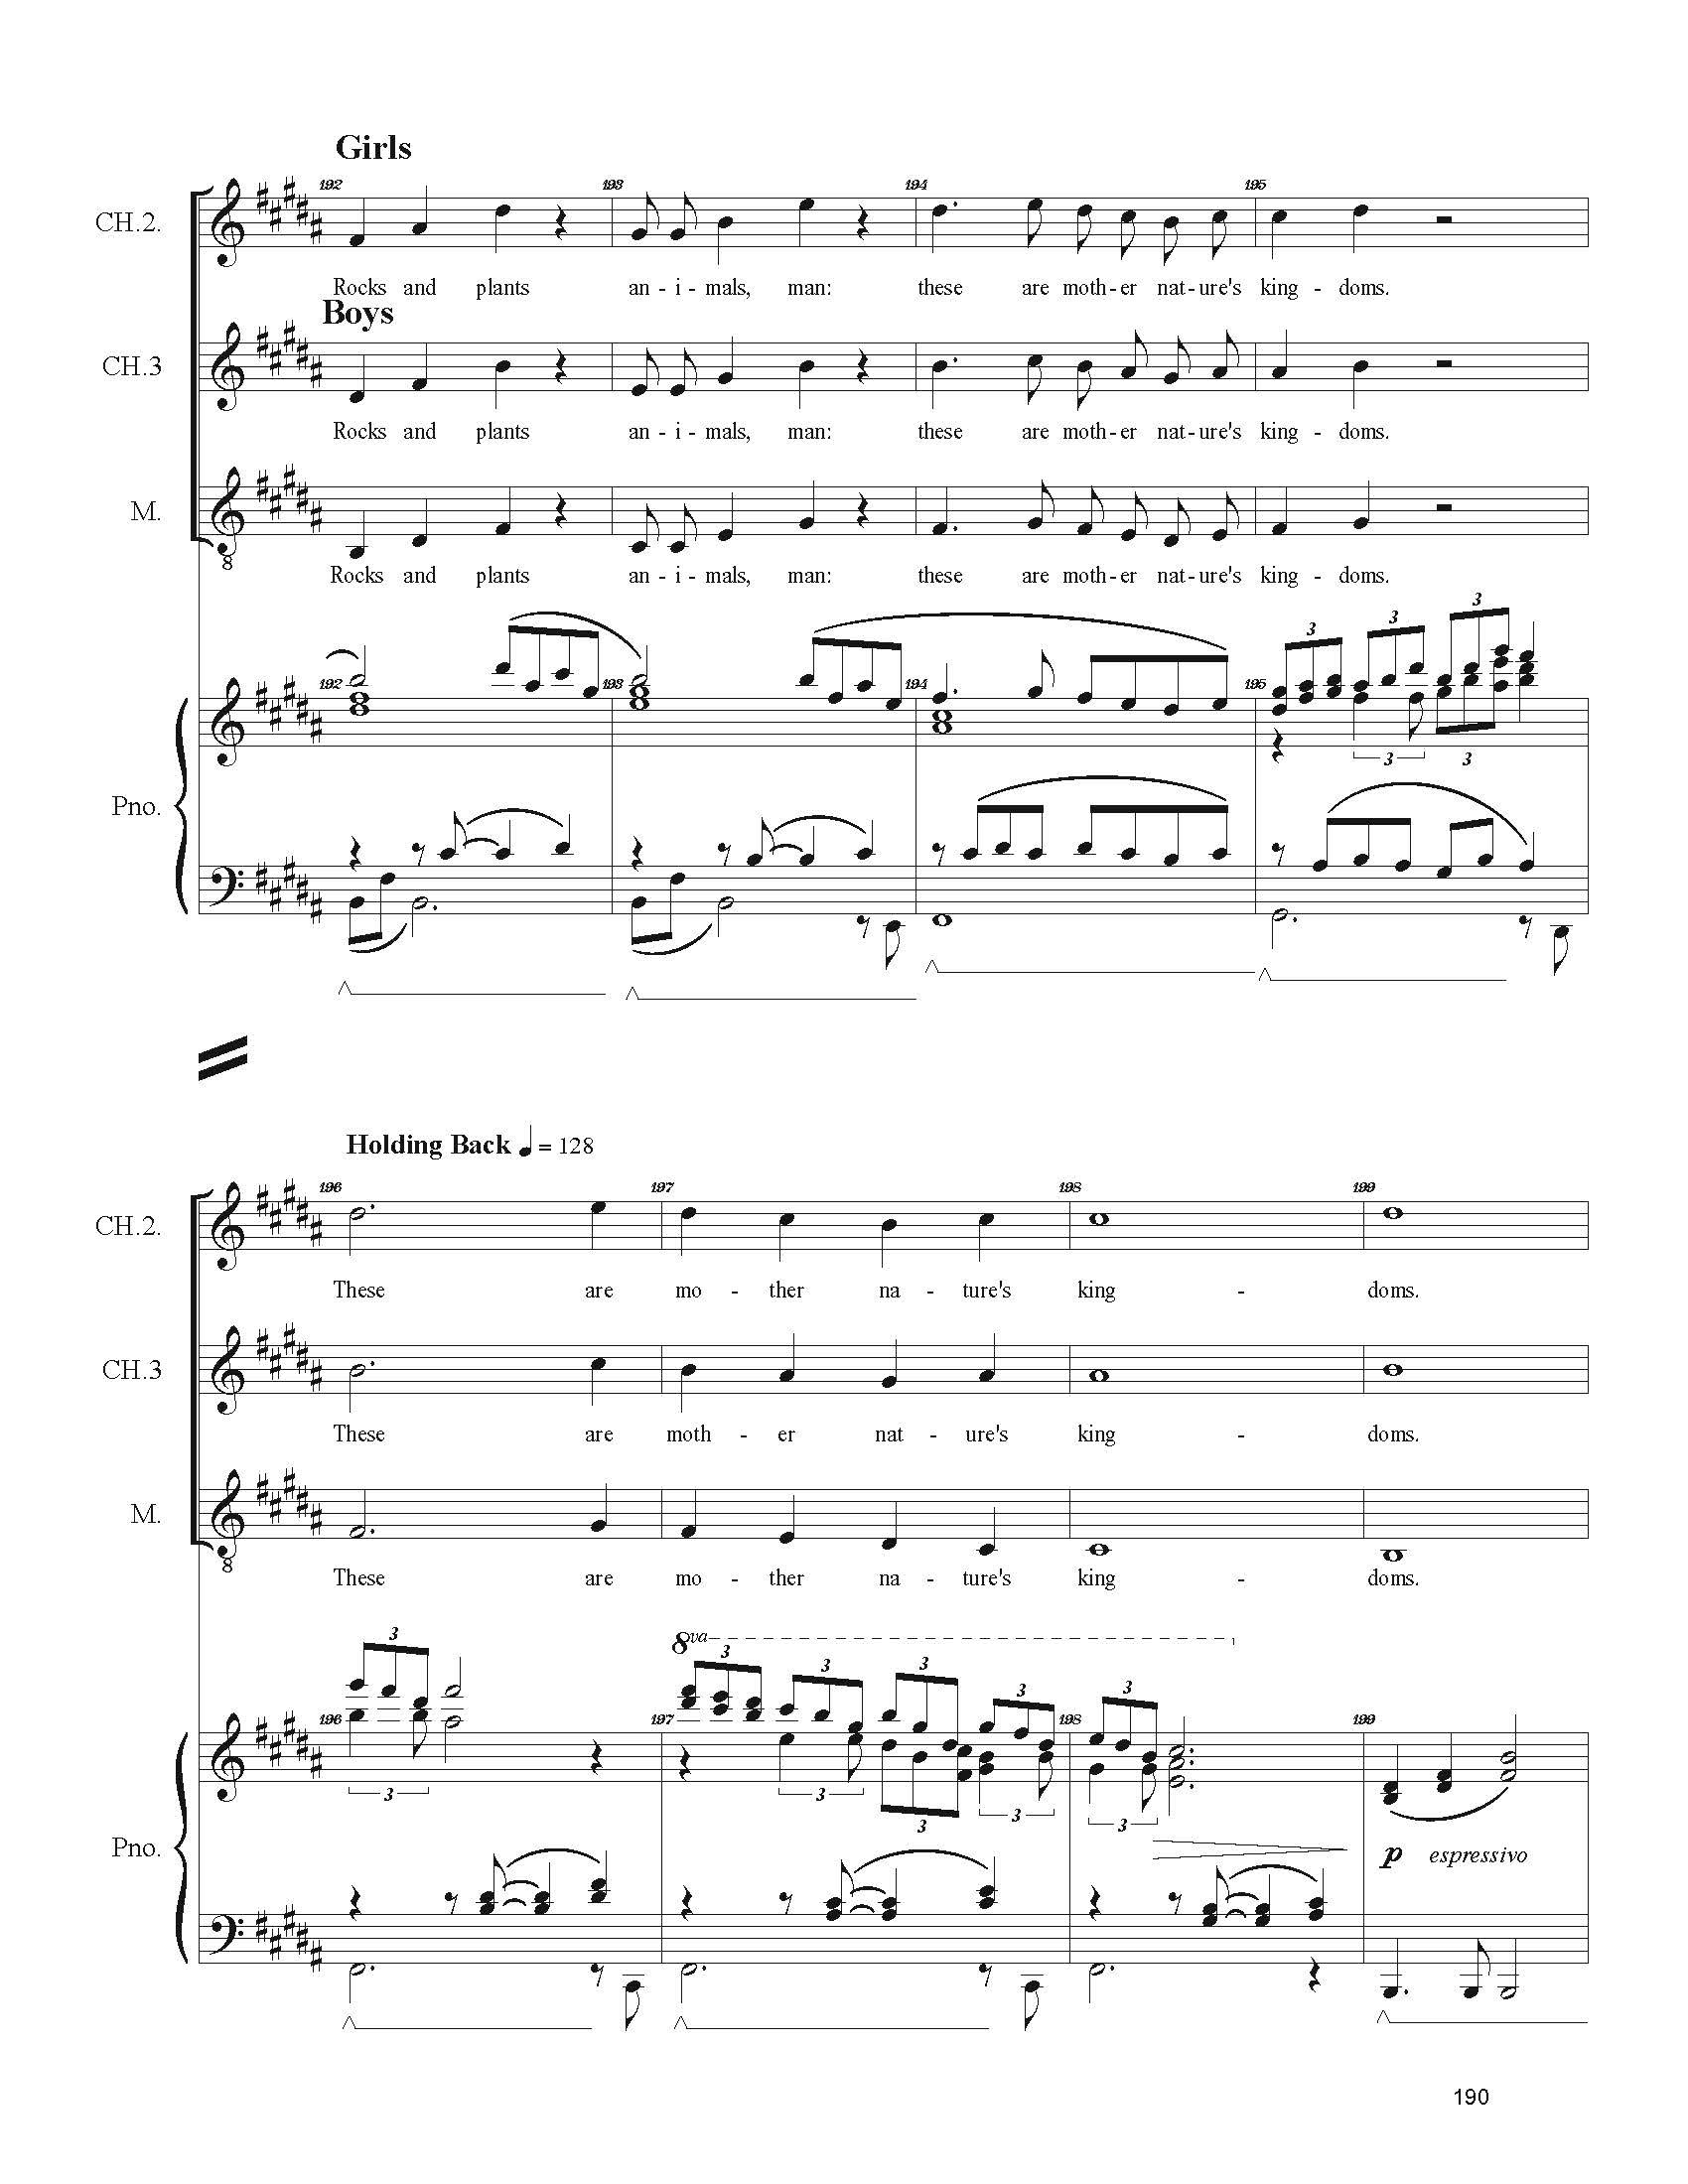 FULL PIANO VOCAL SCORE DRAFT 1 - Score_Page_190.jpg